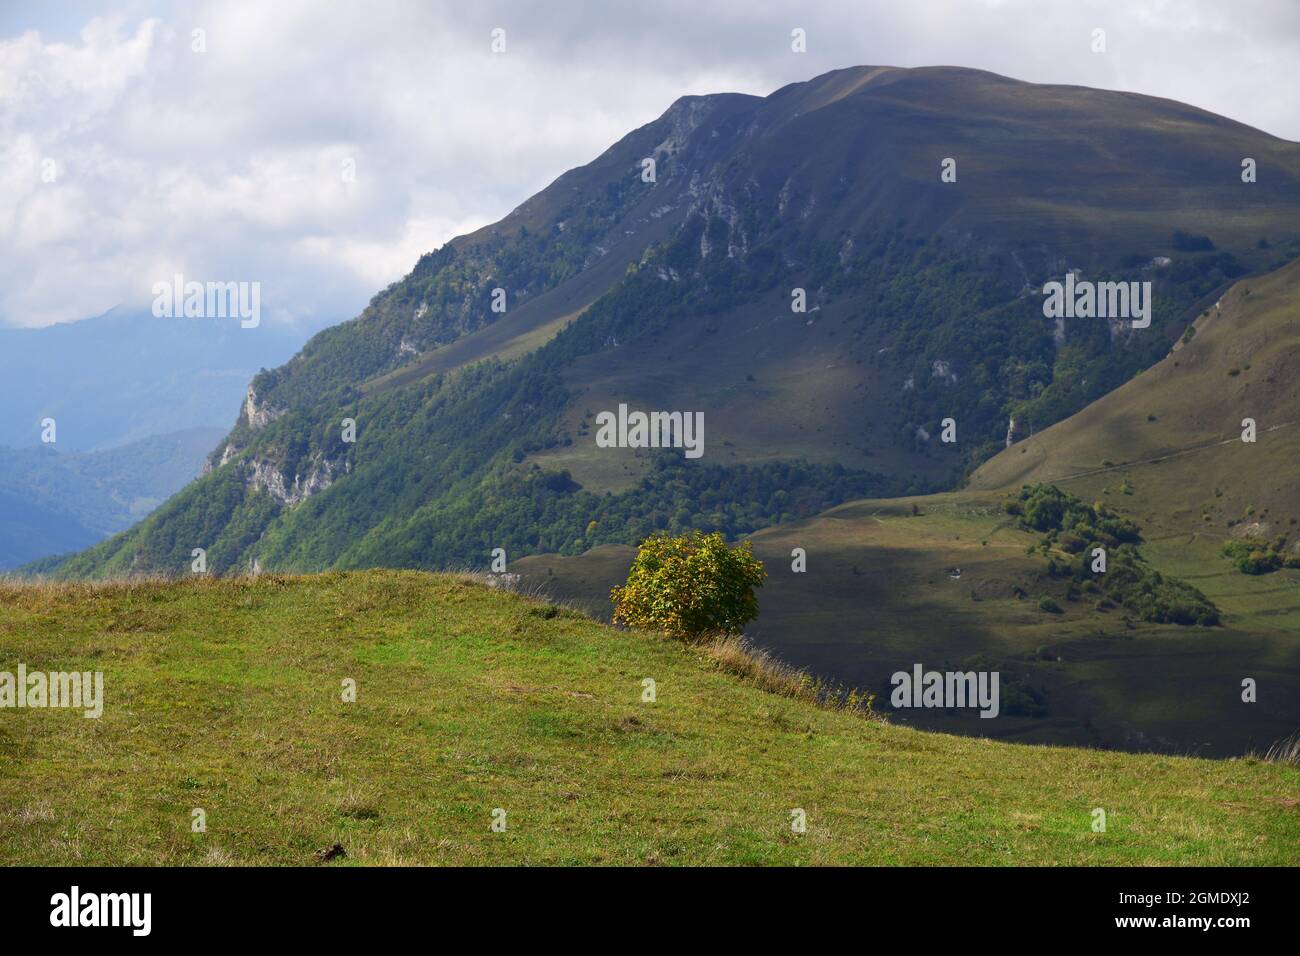 Caucasus alpine meadow and mountains landscape in Chechnya, Russia. Vedeno district of the Chechen Republic Stock Photo